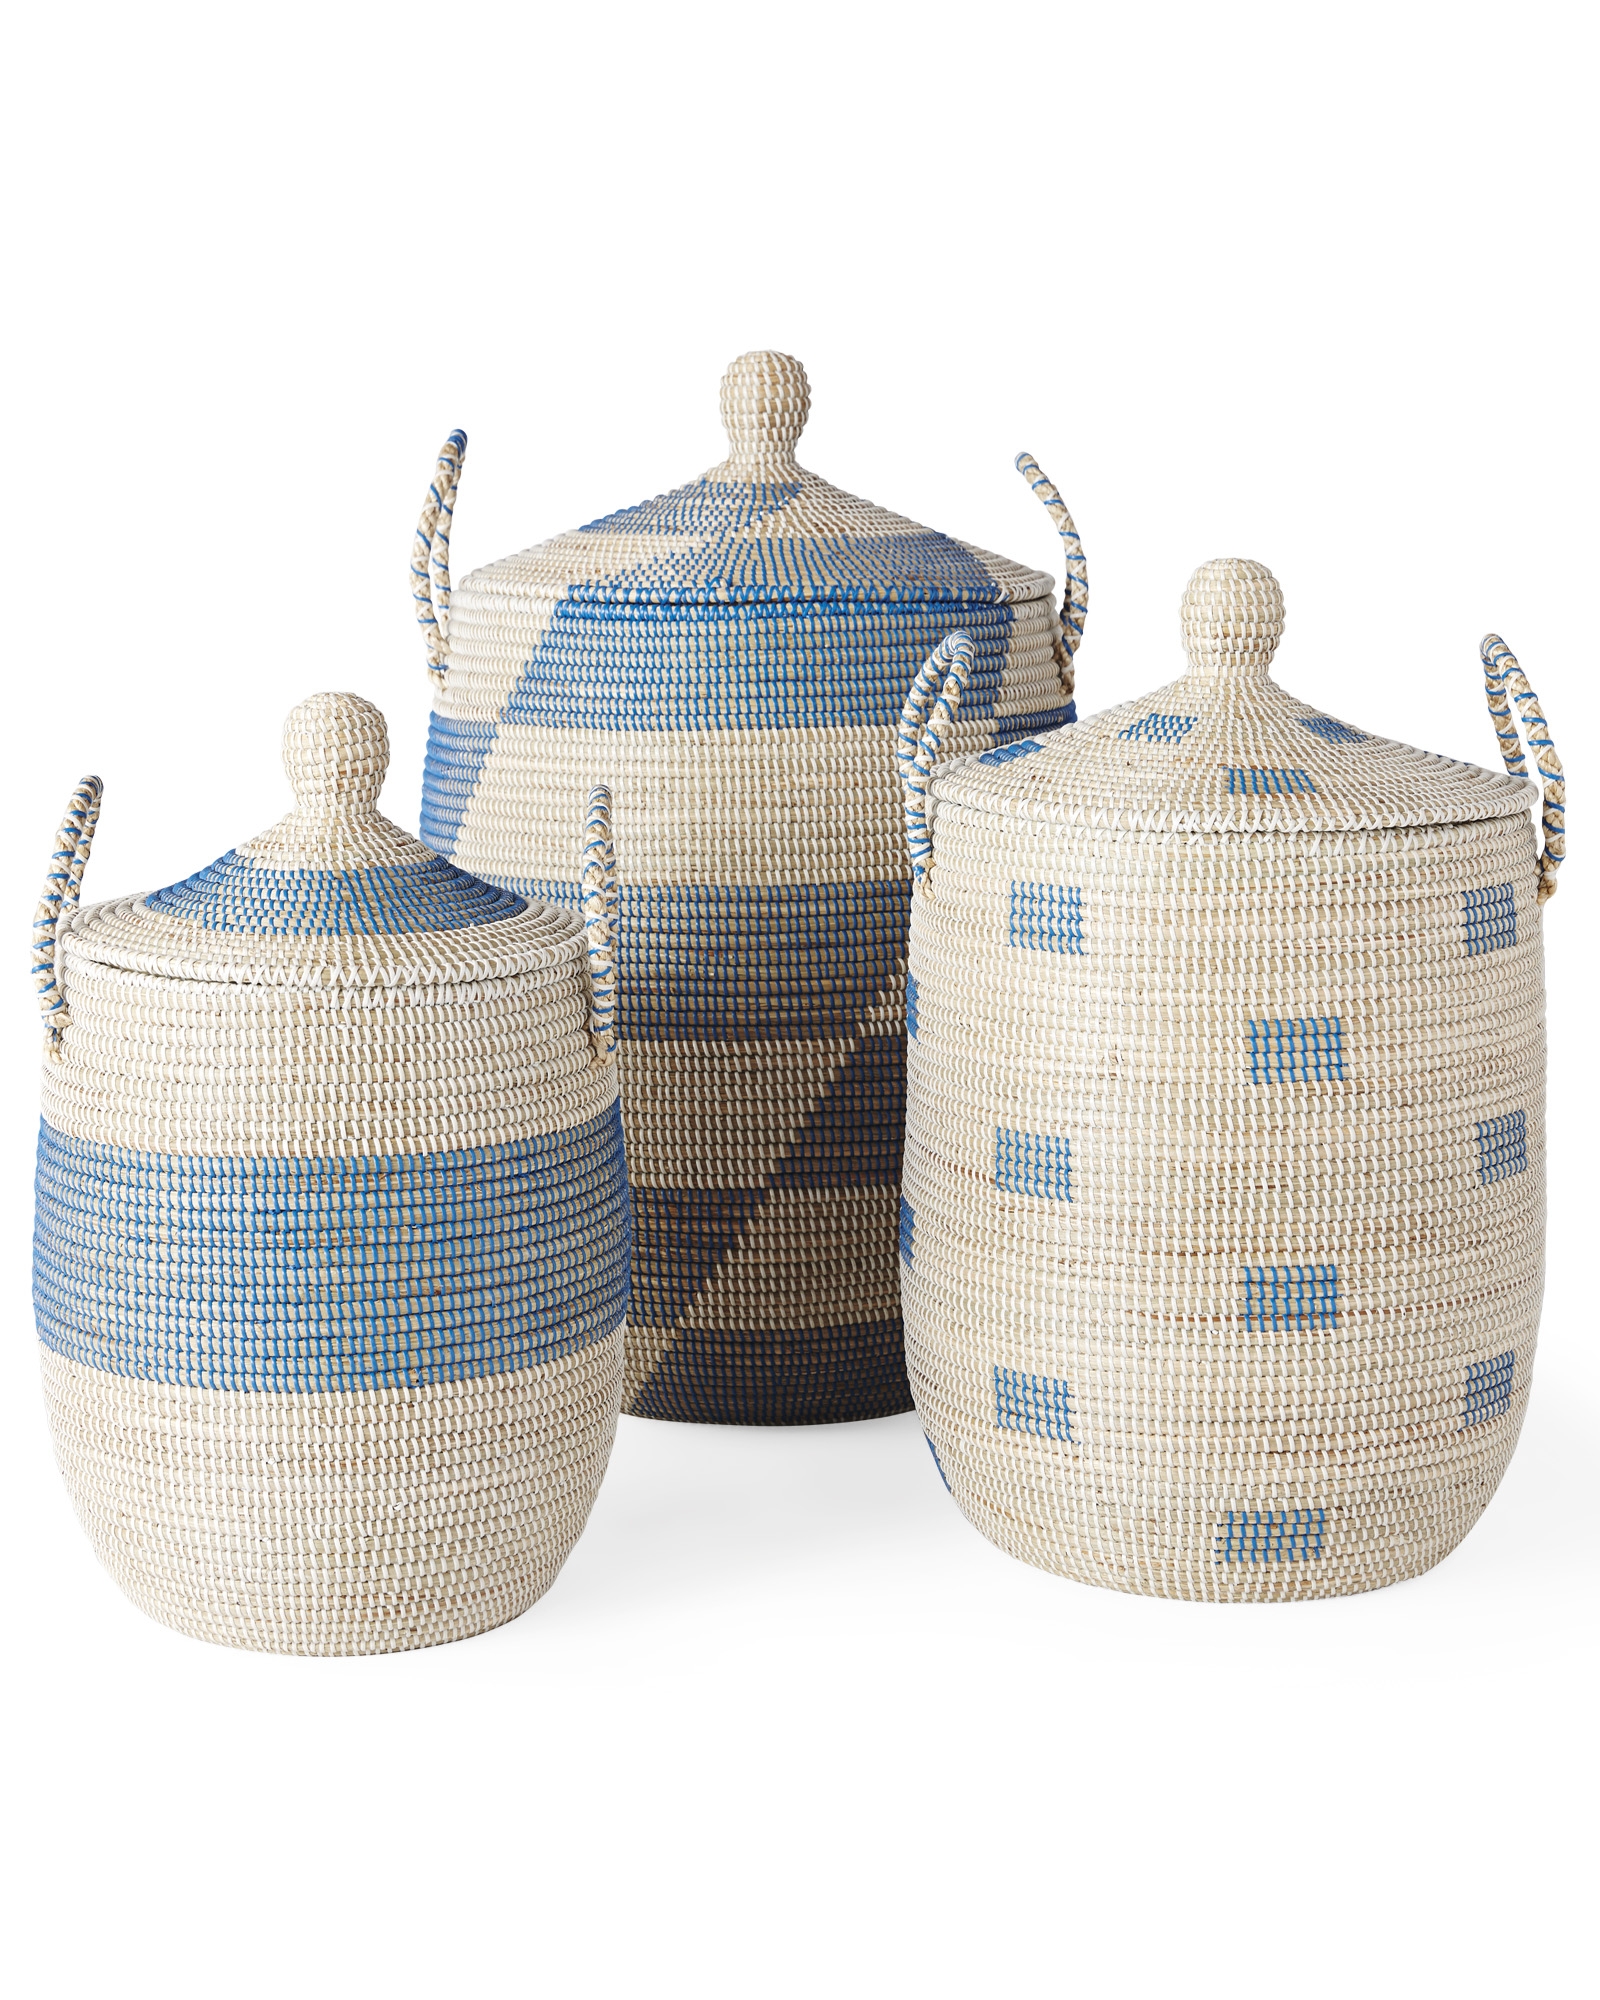 Striped La Jolla Basket - Blue - Medium - Image 1